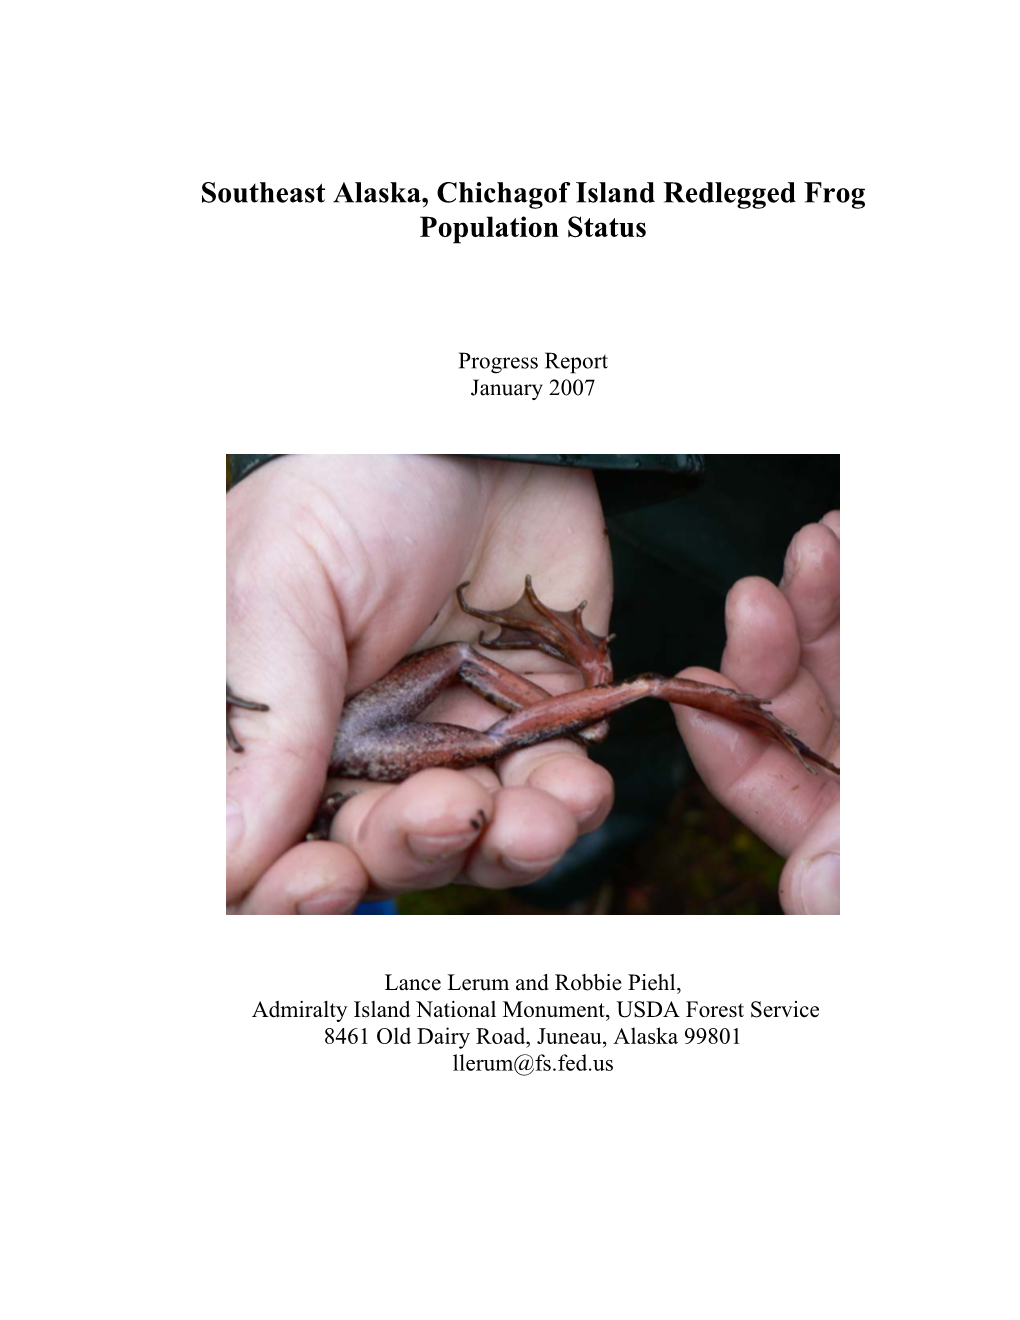 Southeast Alaska, Chichagof Island Redlegged Frog Population Status